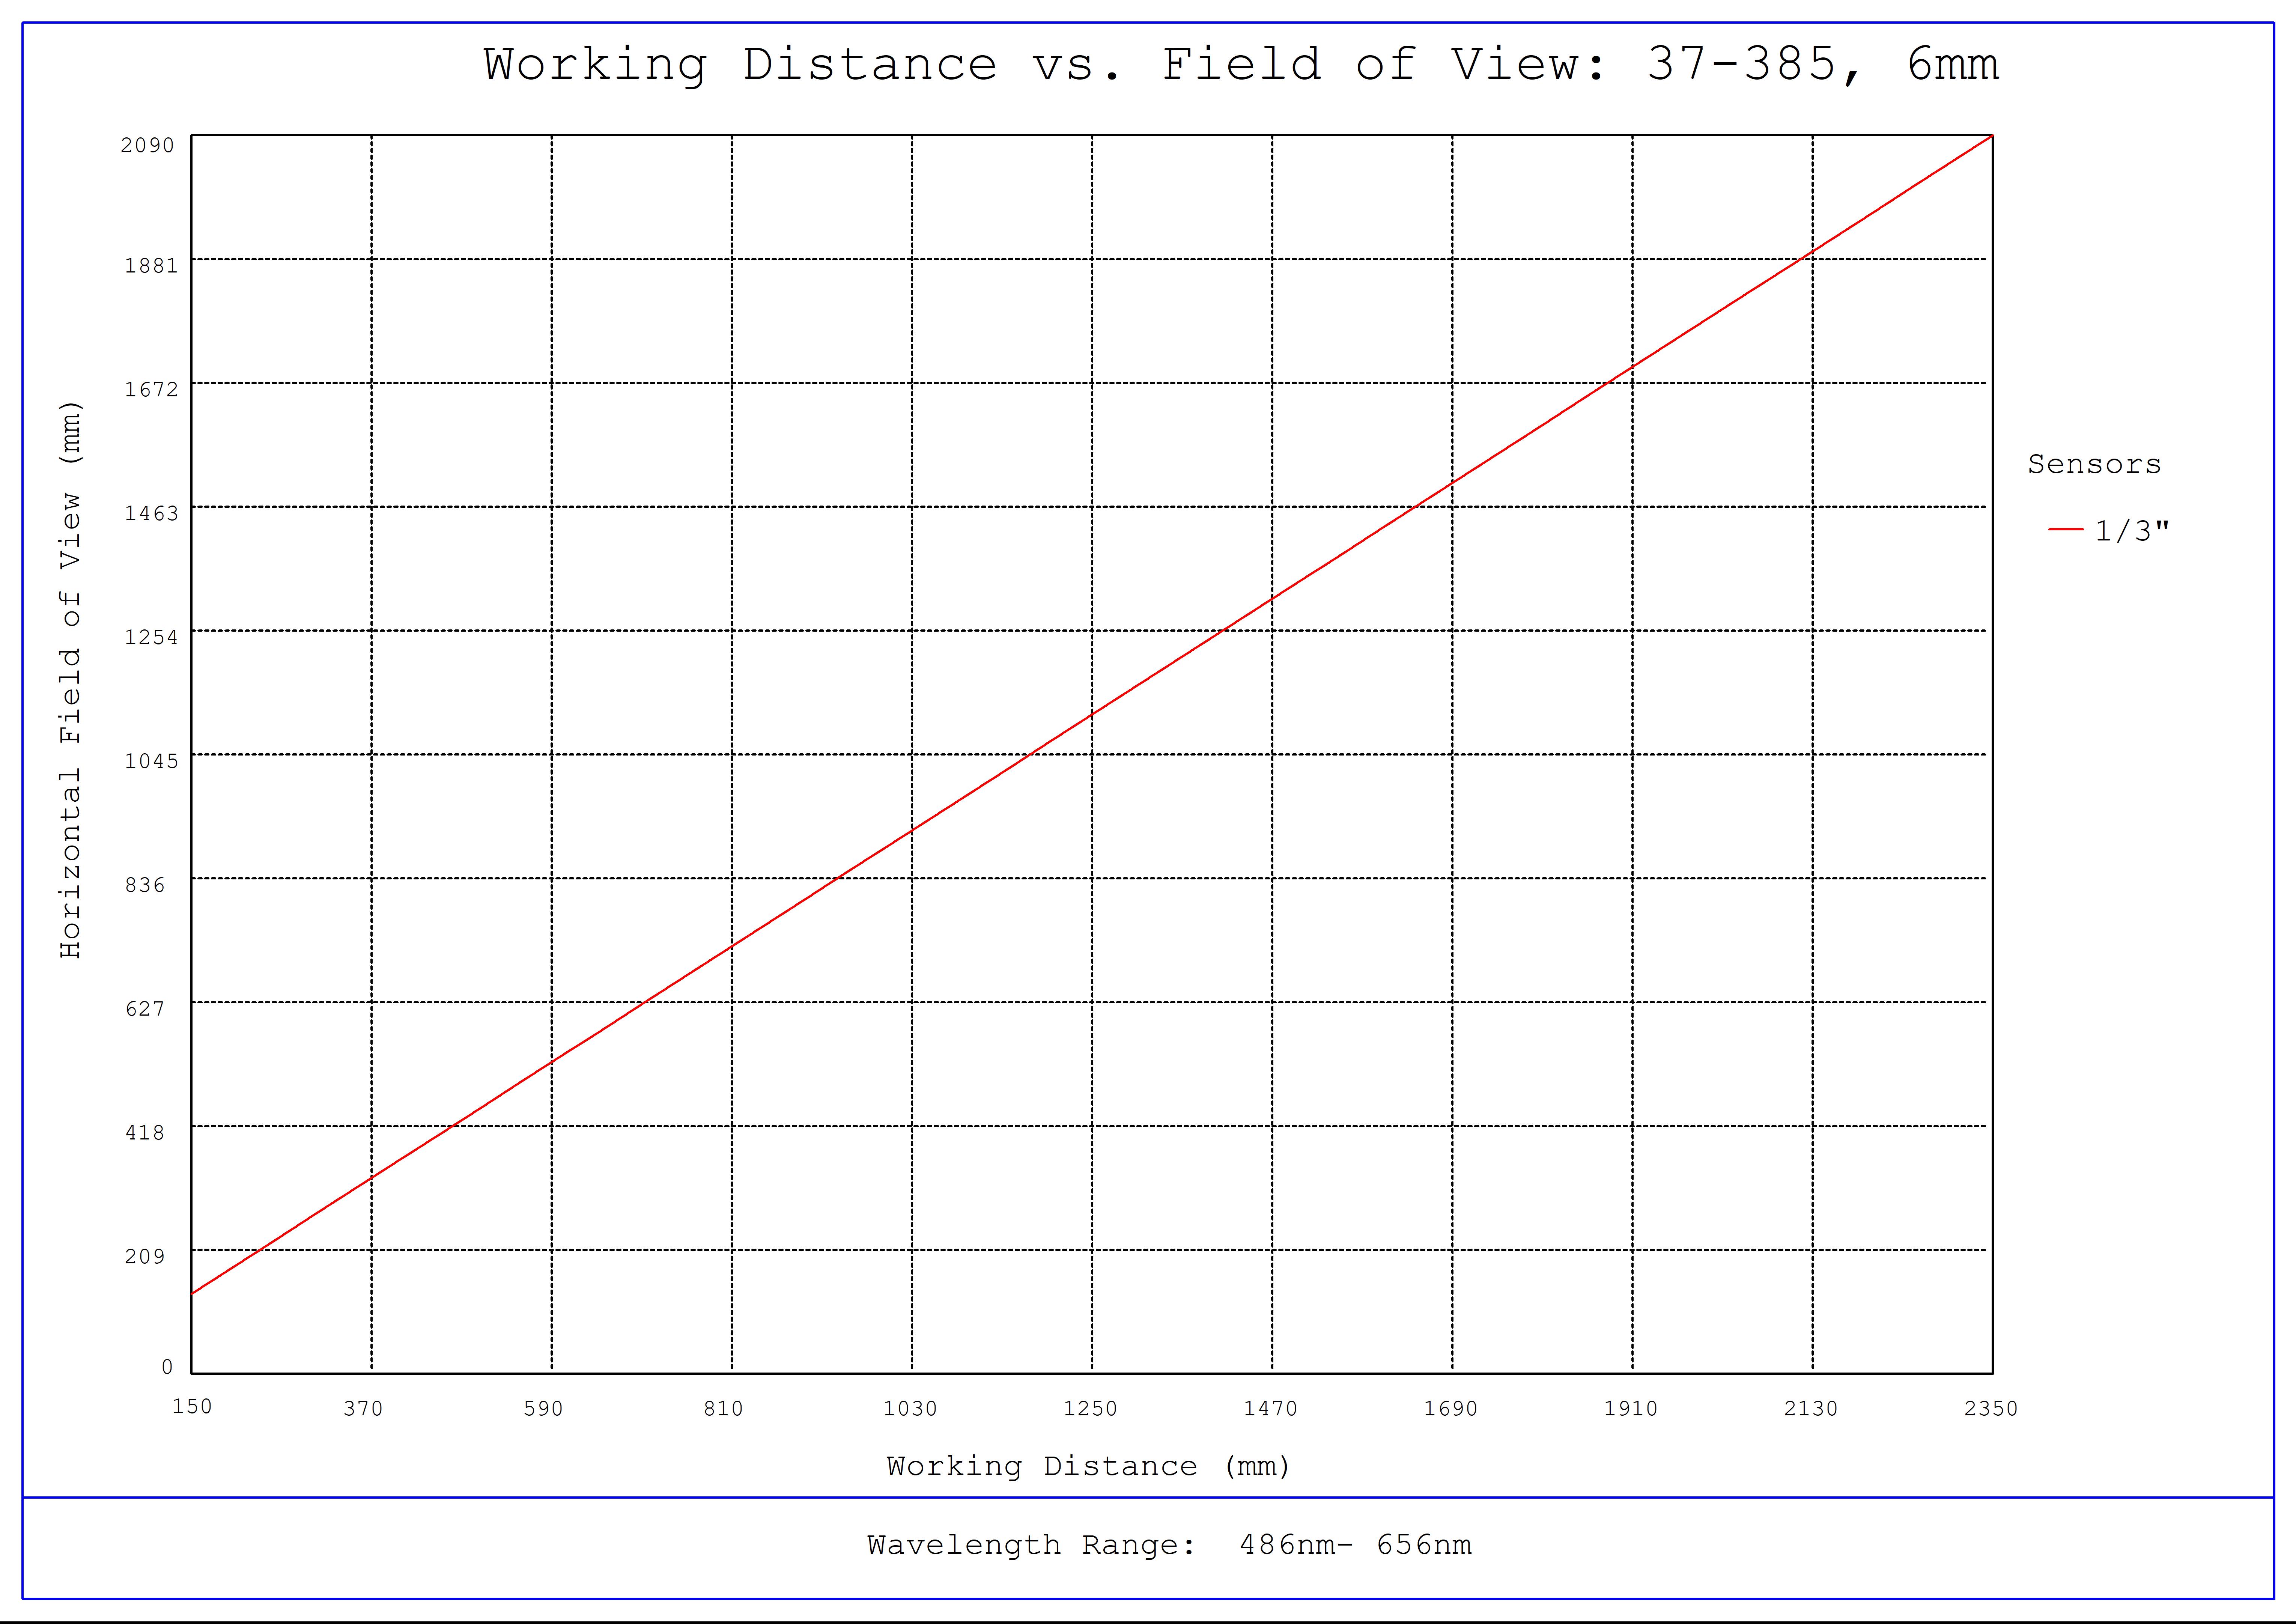 #37-385, 6mm FL f/8.0, Rugged Blue Series M12 Lens, Working Distance versus Field of View Plot